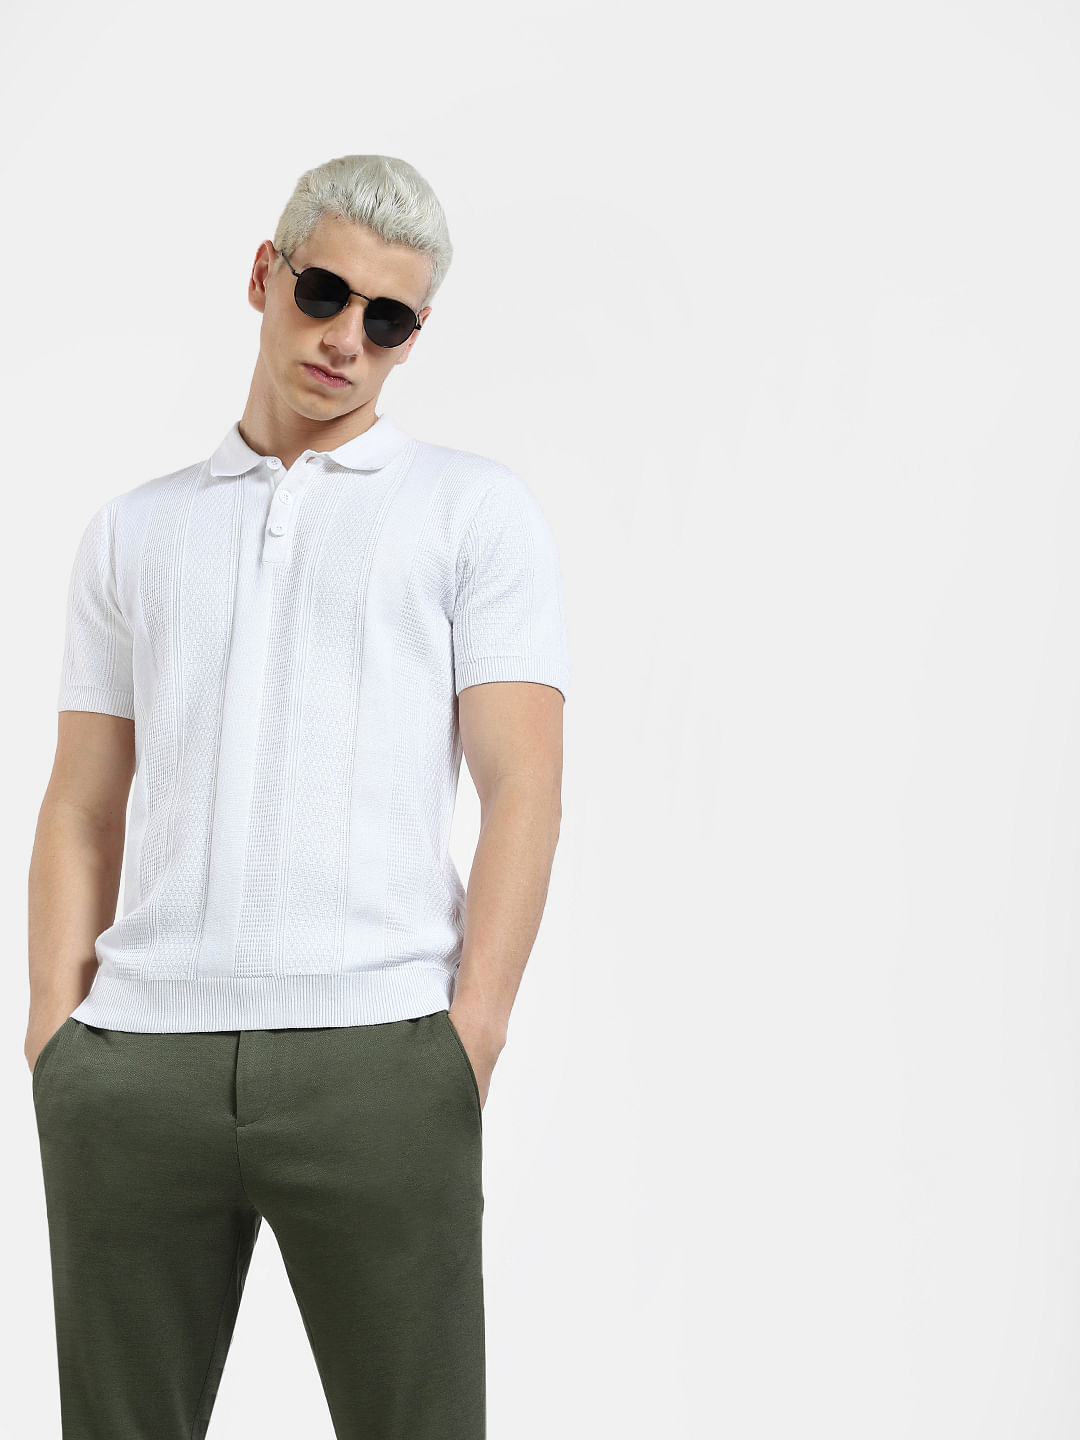 7 Best Black Shirt Combination Pants Ideas for Men  Beyoung Blog